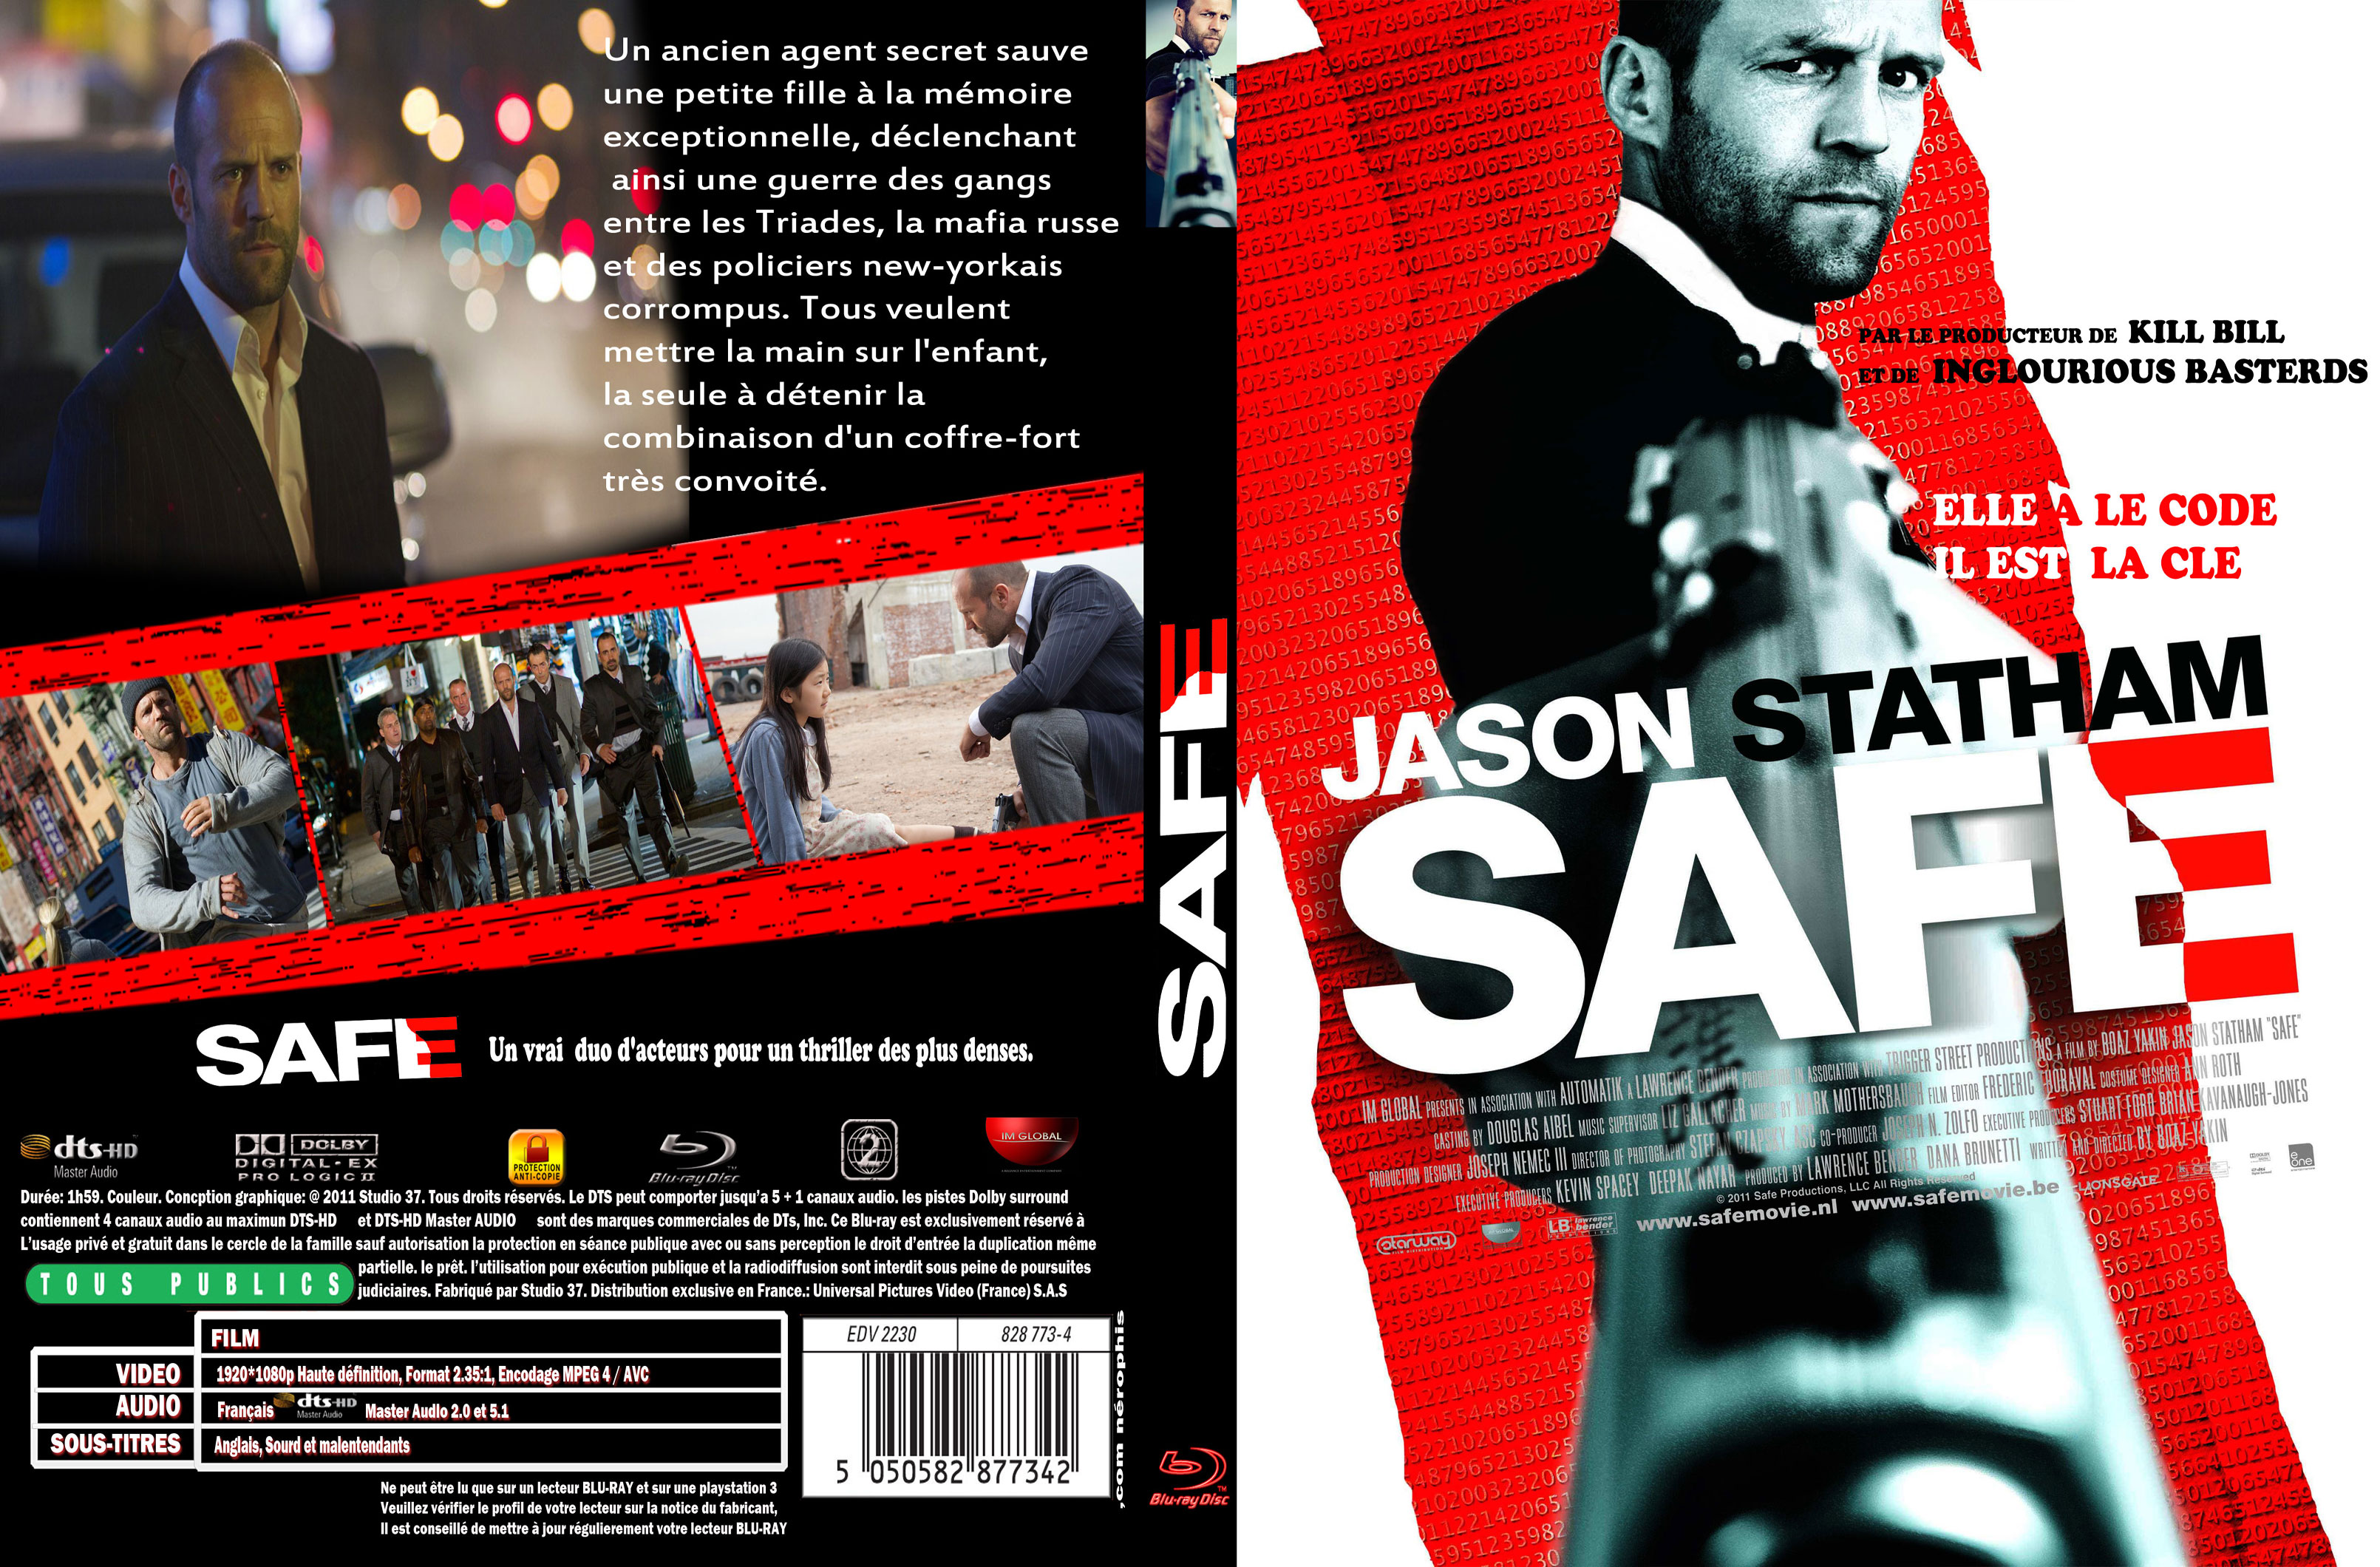 Jaquette DVD Safe custom